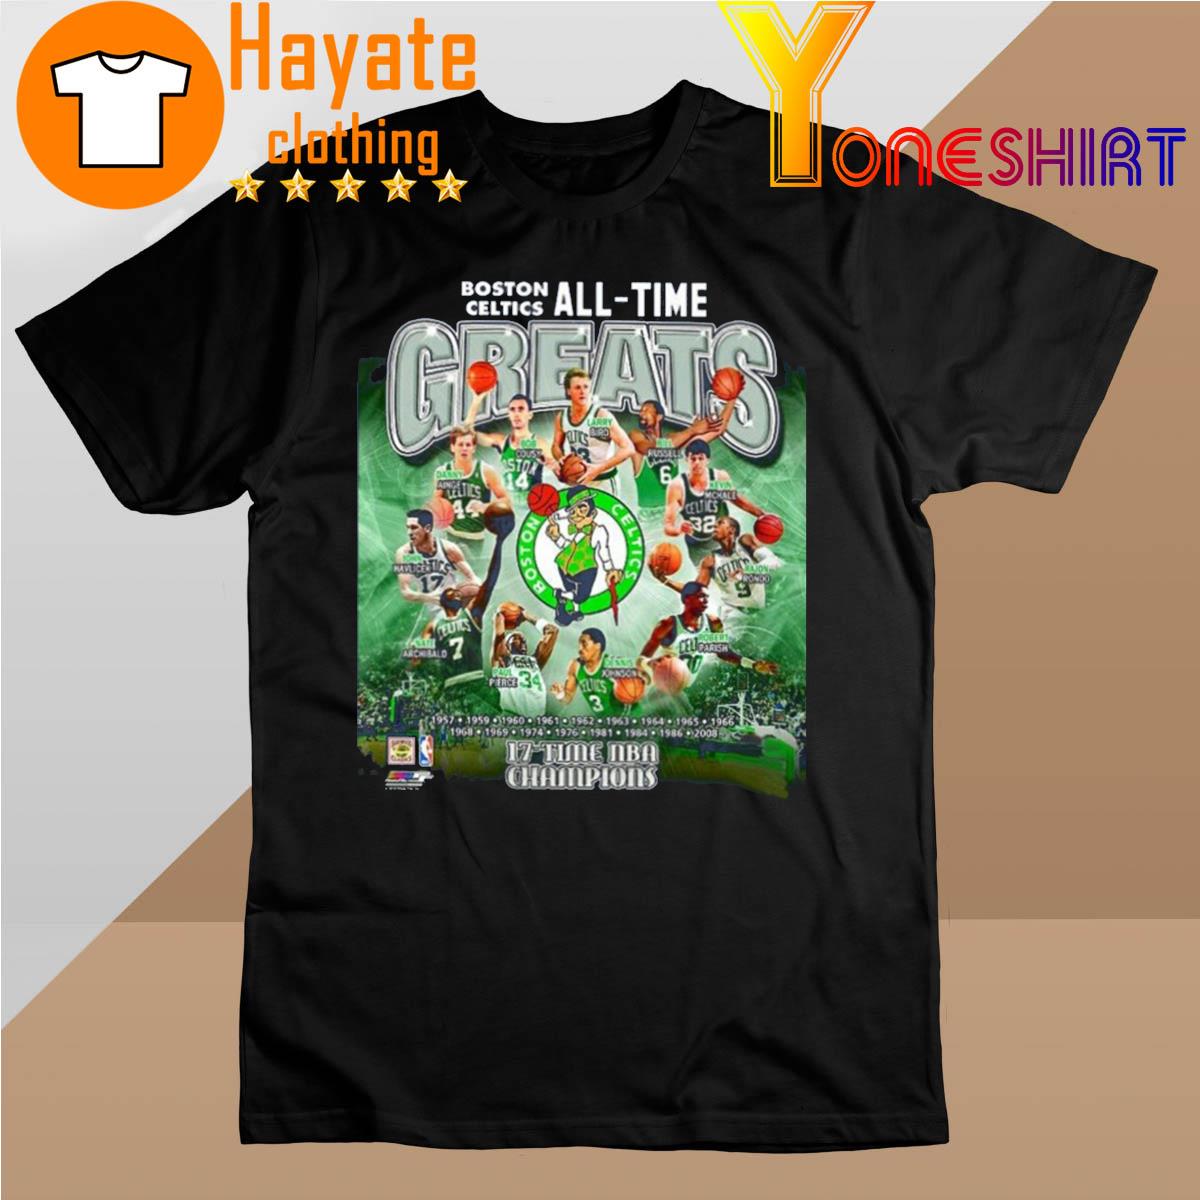 Boston Celtics All-Time Greats 17 Time NBA Champions shirt